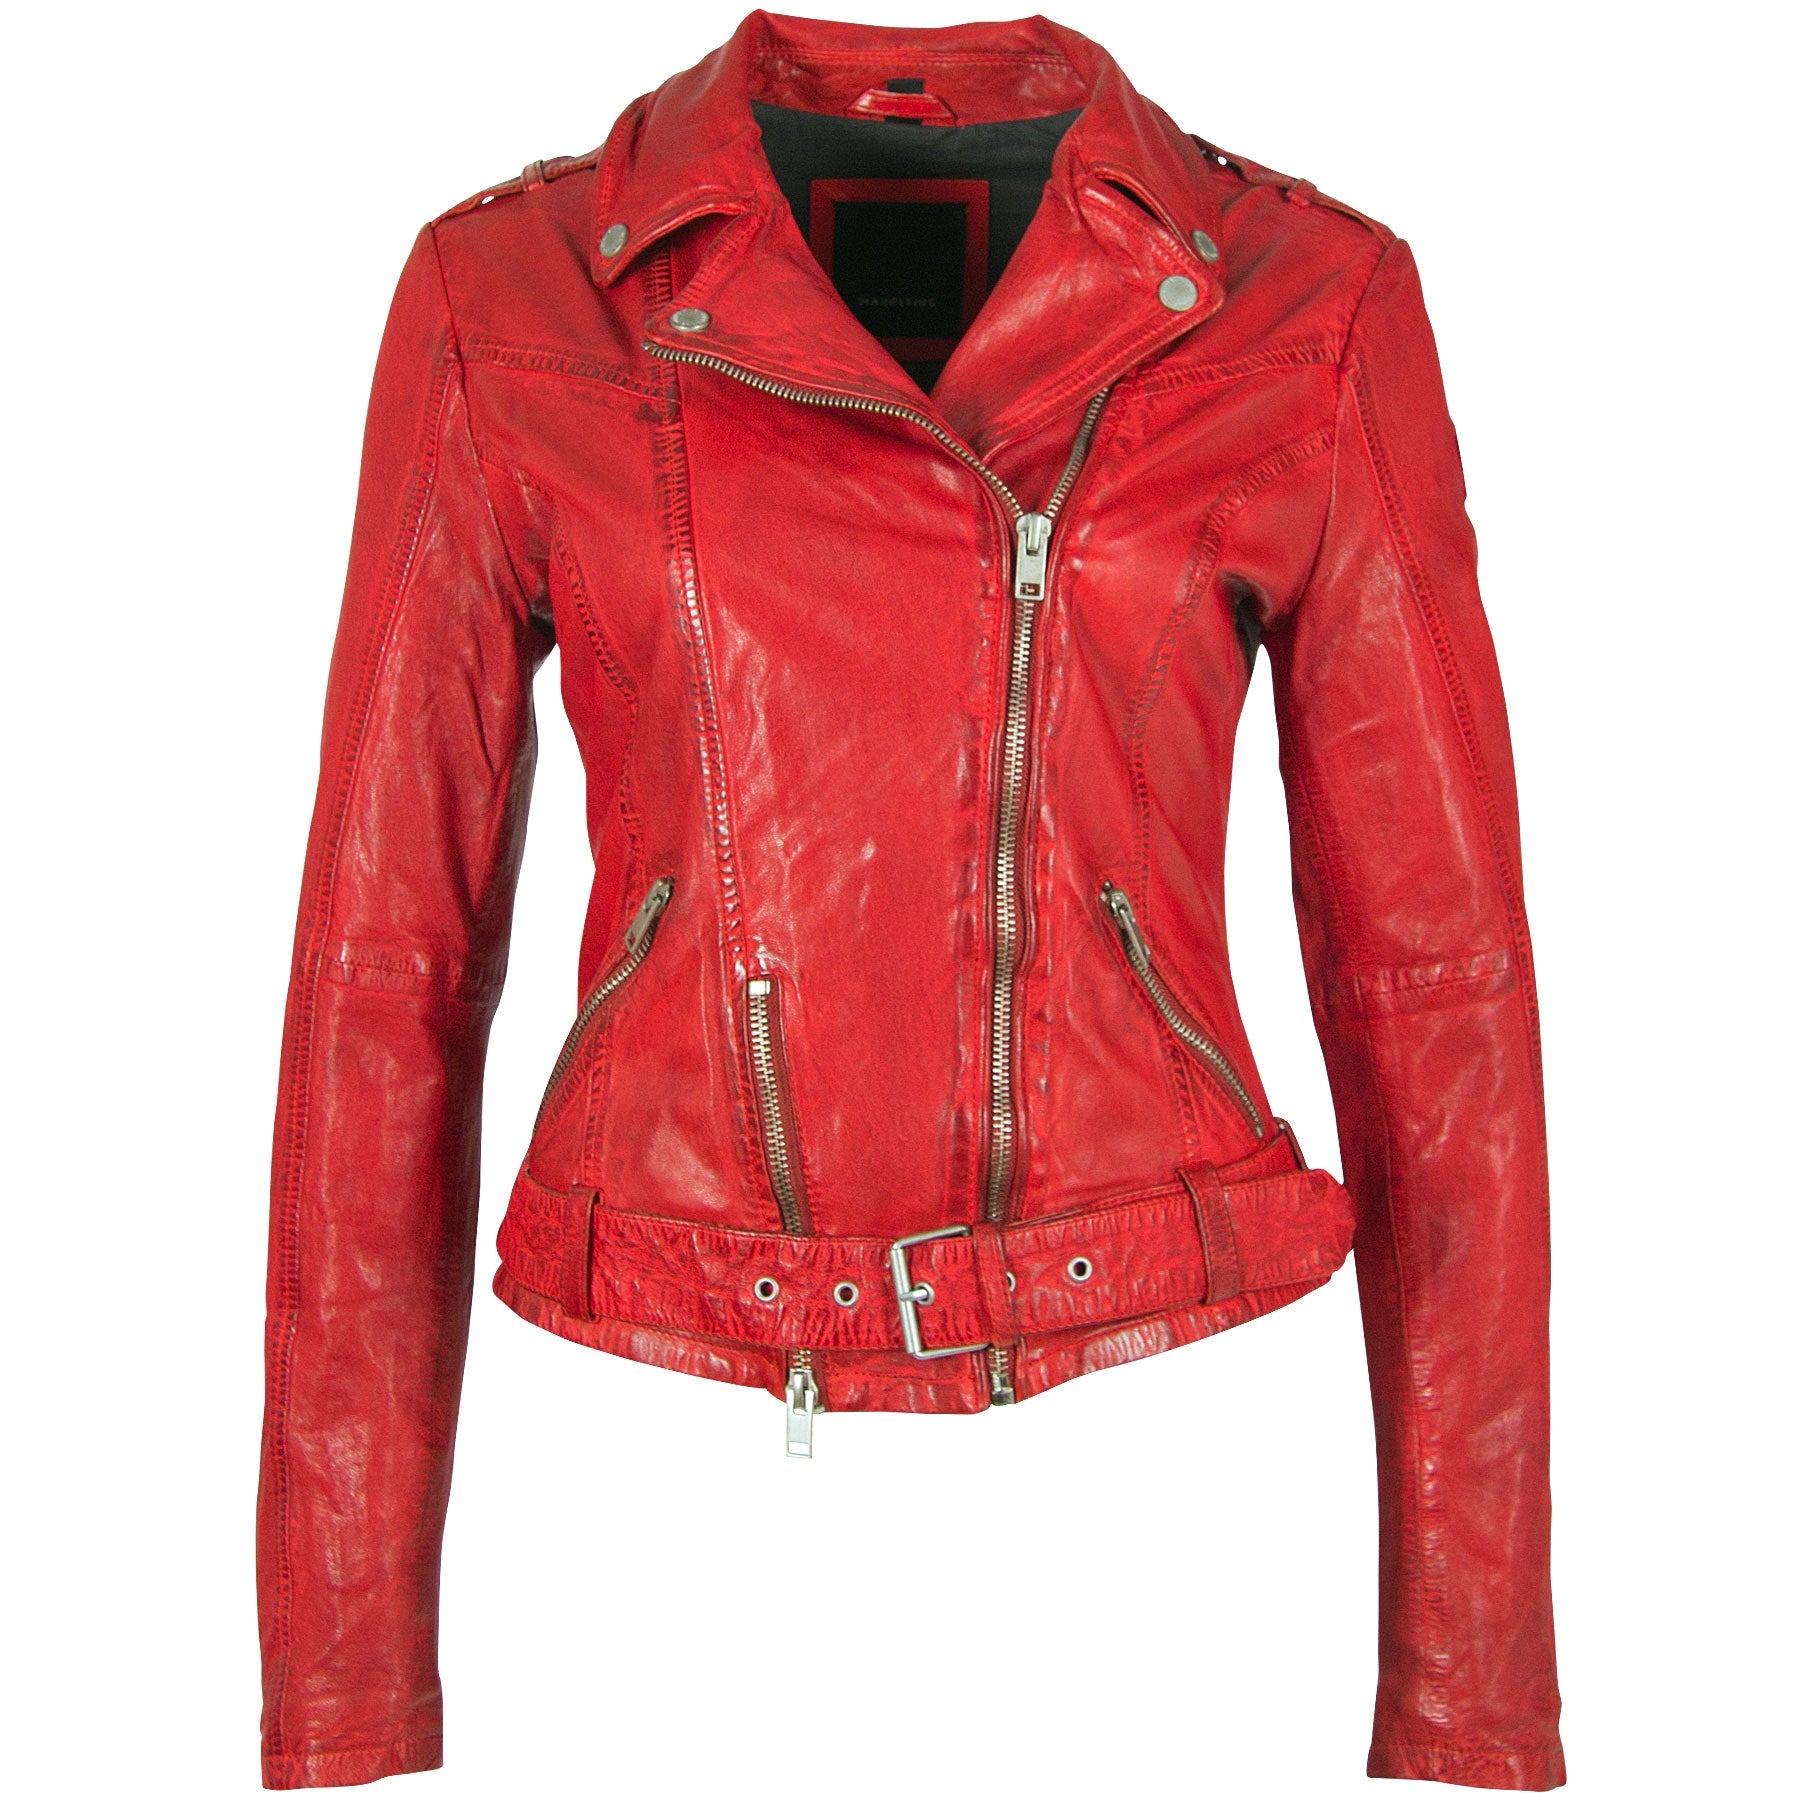 Mauritius Women's Wild Rf Leather Jacket, Lipstick Red